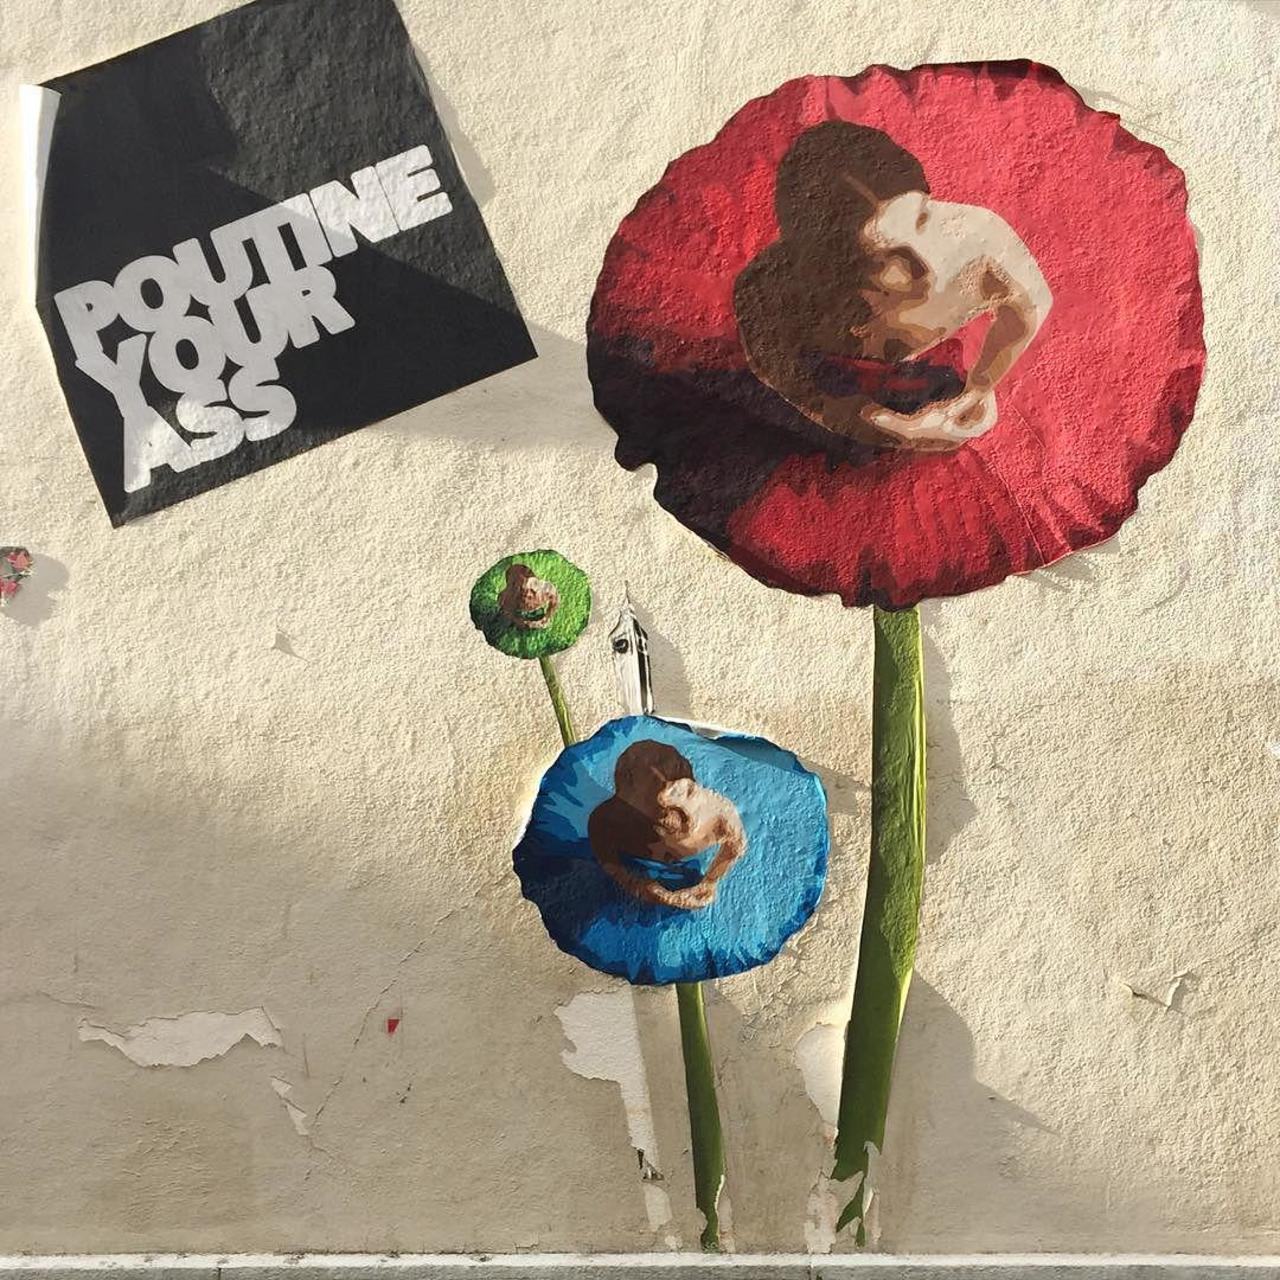 #Paris #graffiti photo by @catscoffeecreativity http://ift.tt/1X8YqZ8 #StreetArt http://t.co/JC0UYft1sZ